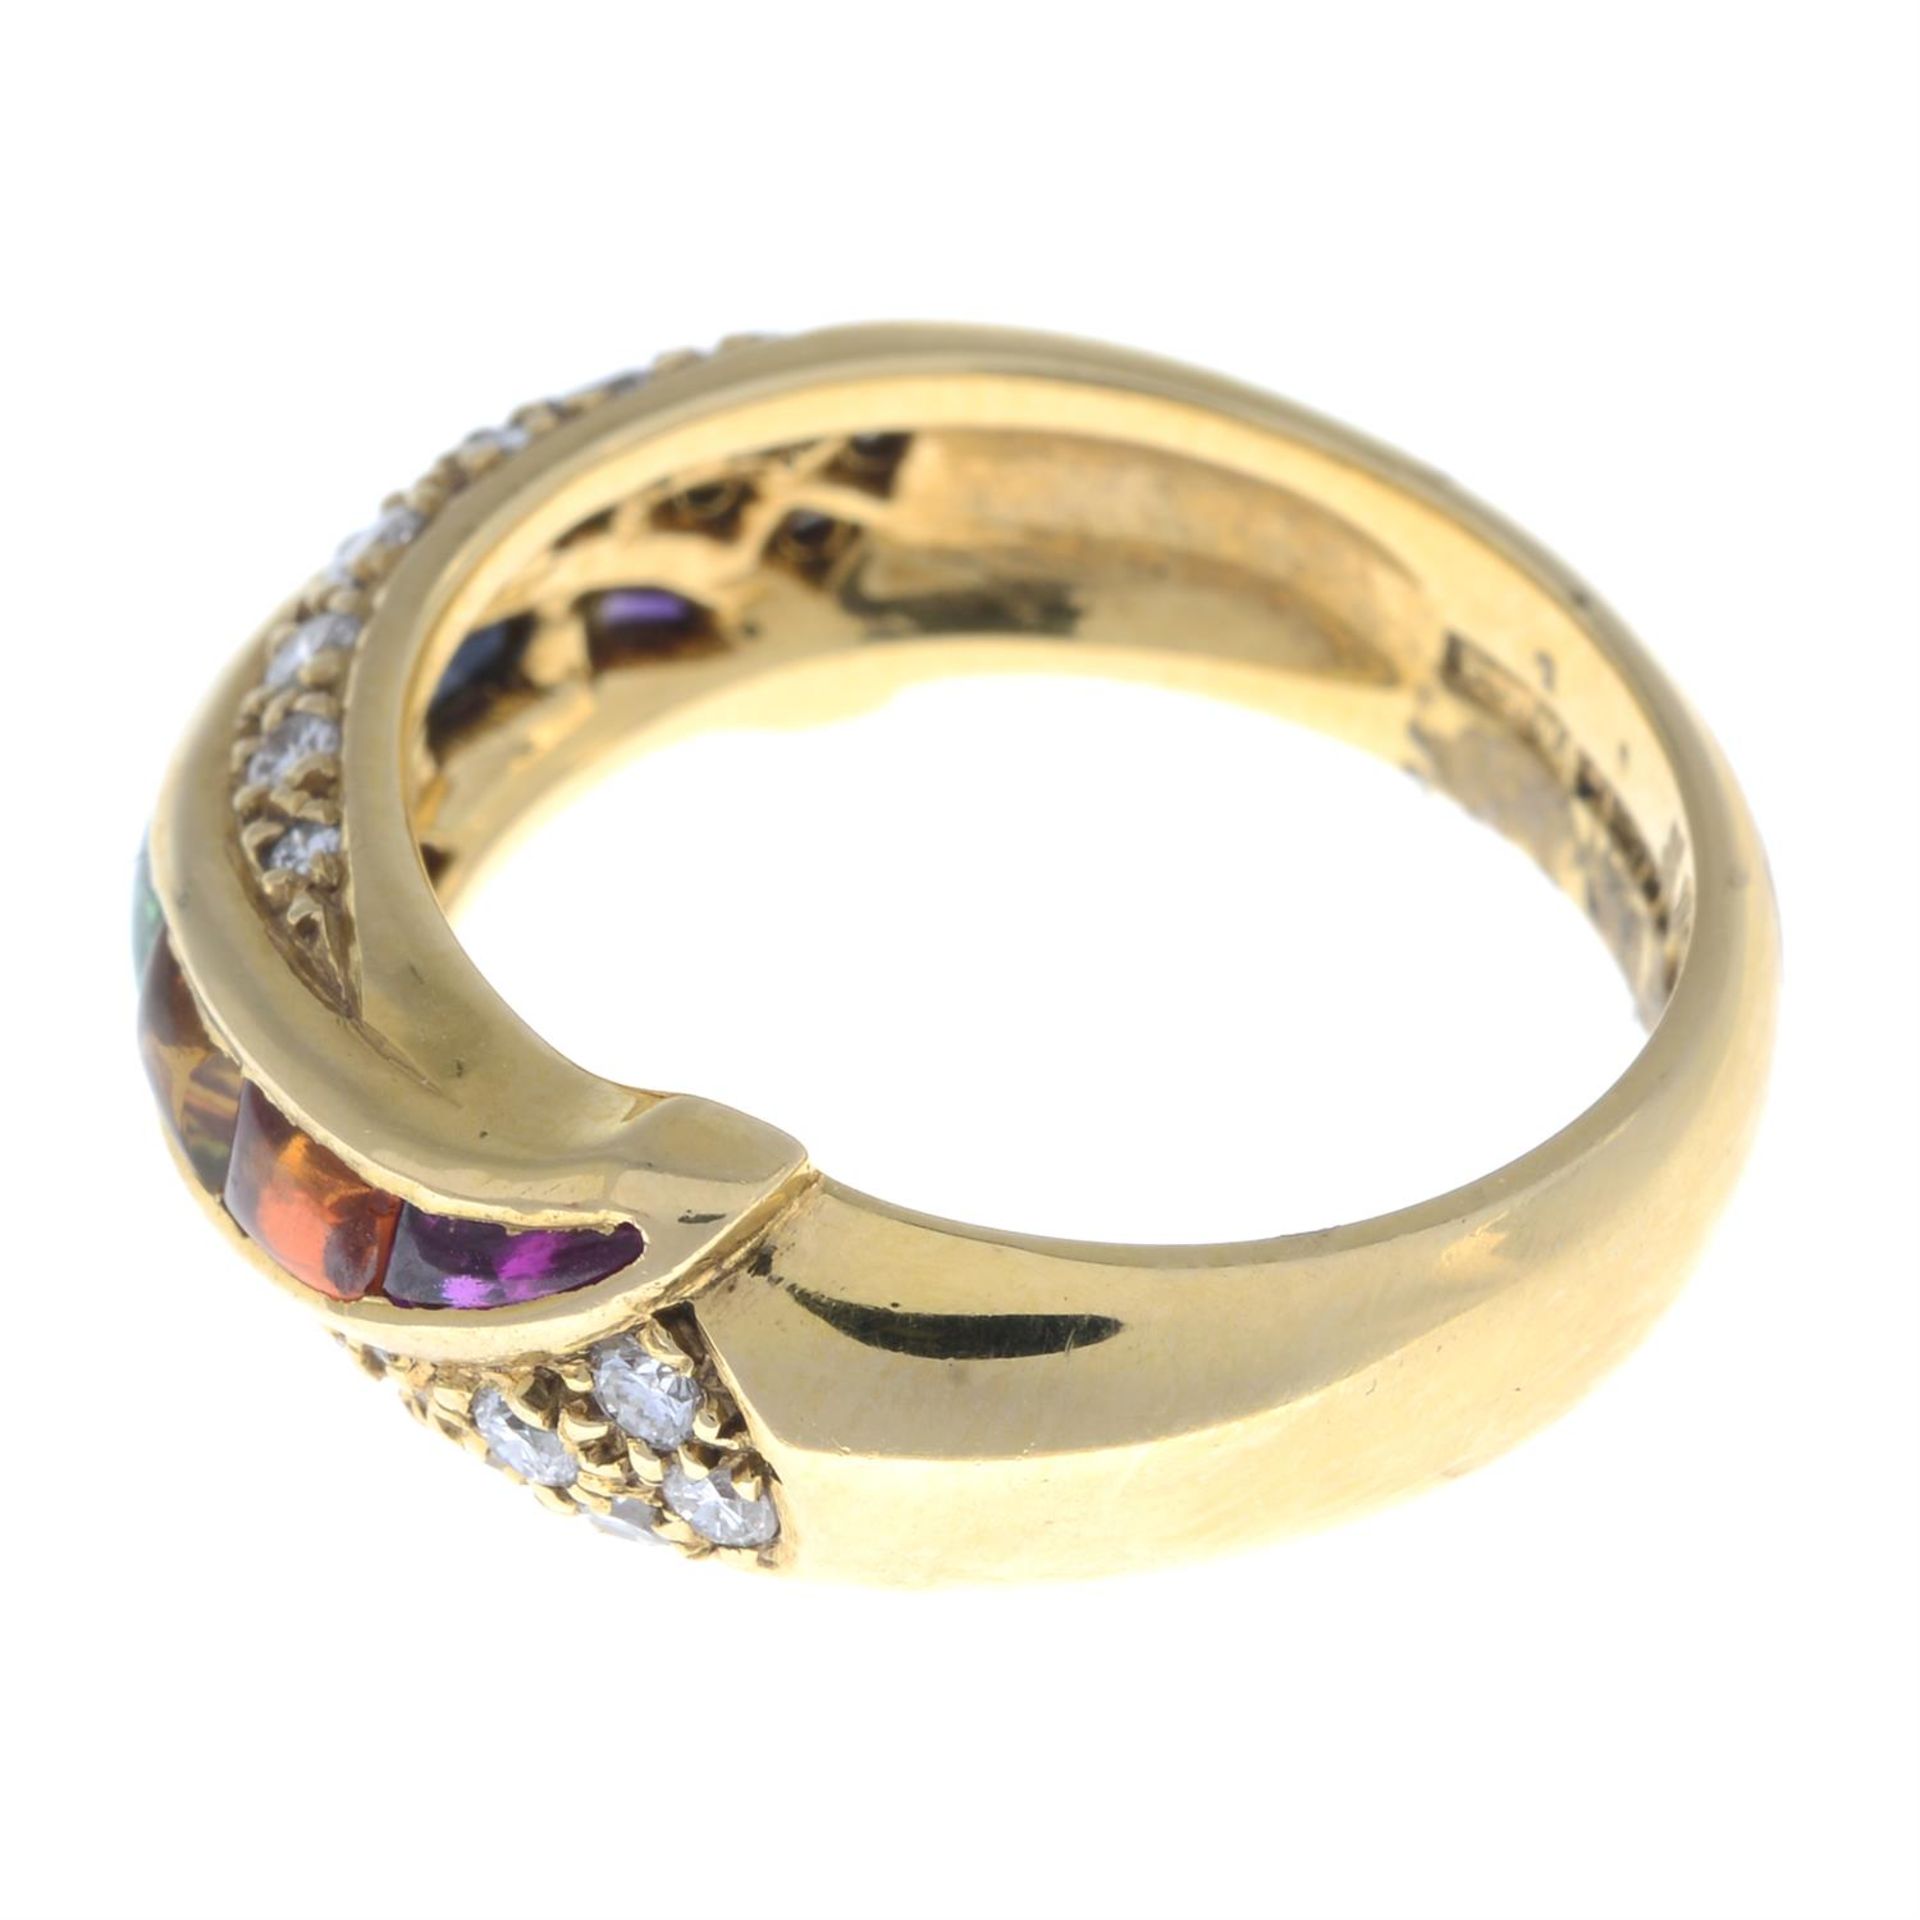 18ct gold vari-hue sapphire & diamond ring - Image 4 of 4